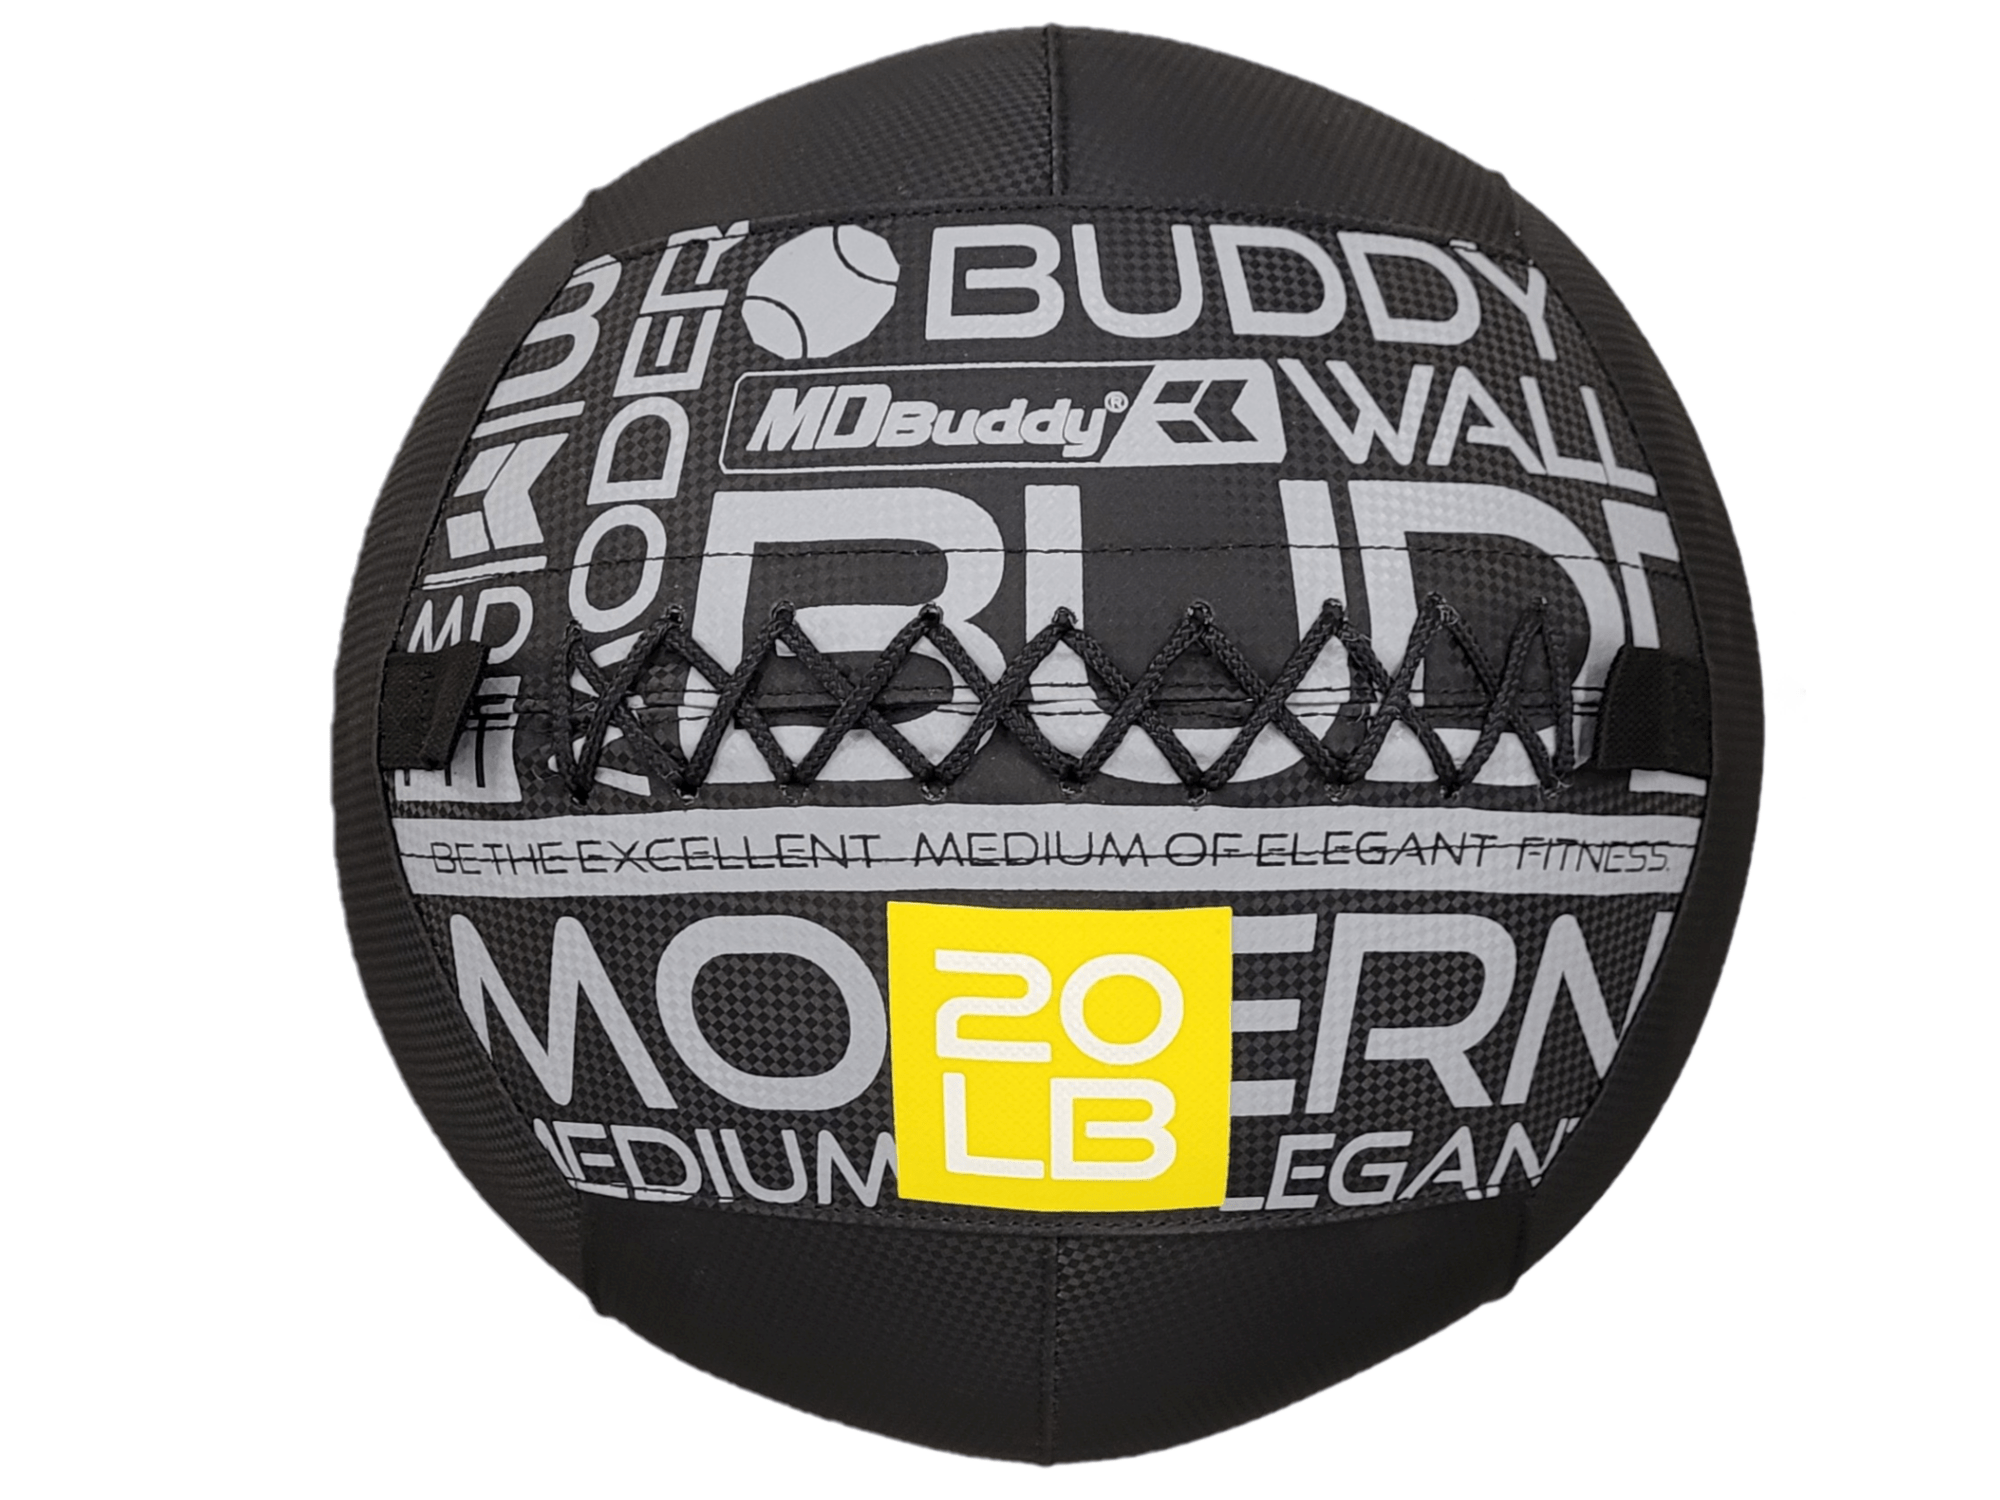 MD Buddy Wall Balls-Balls-MD Buddy-8